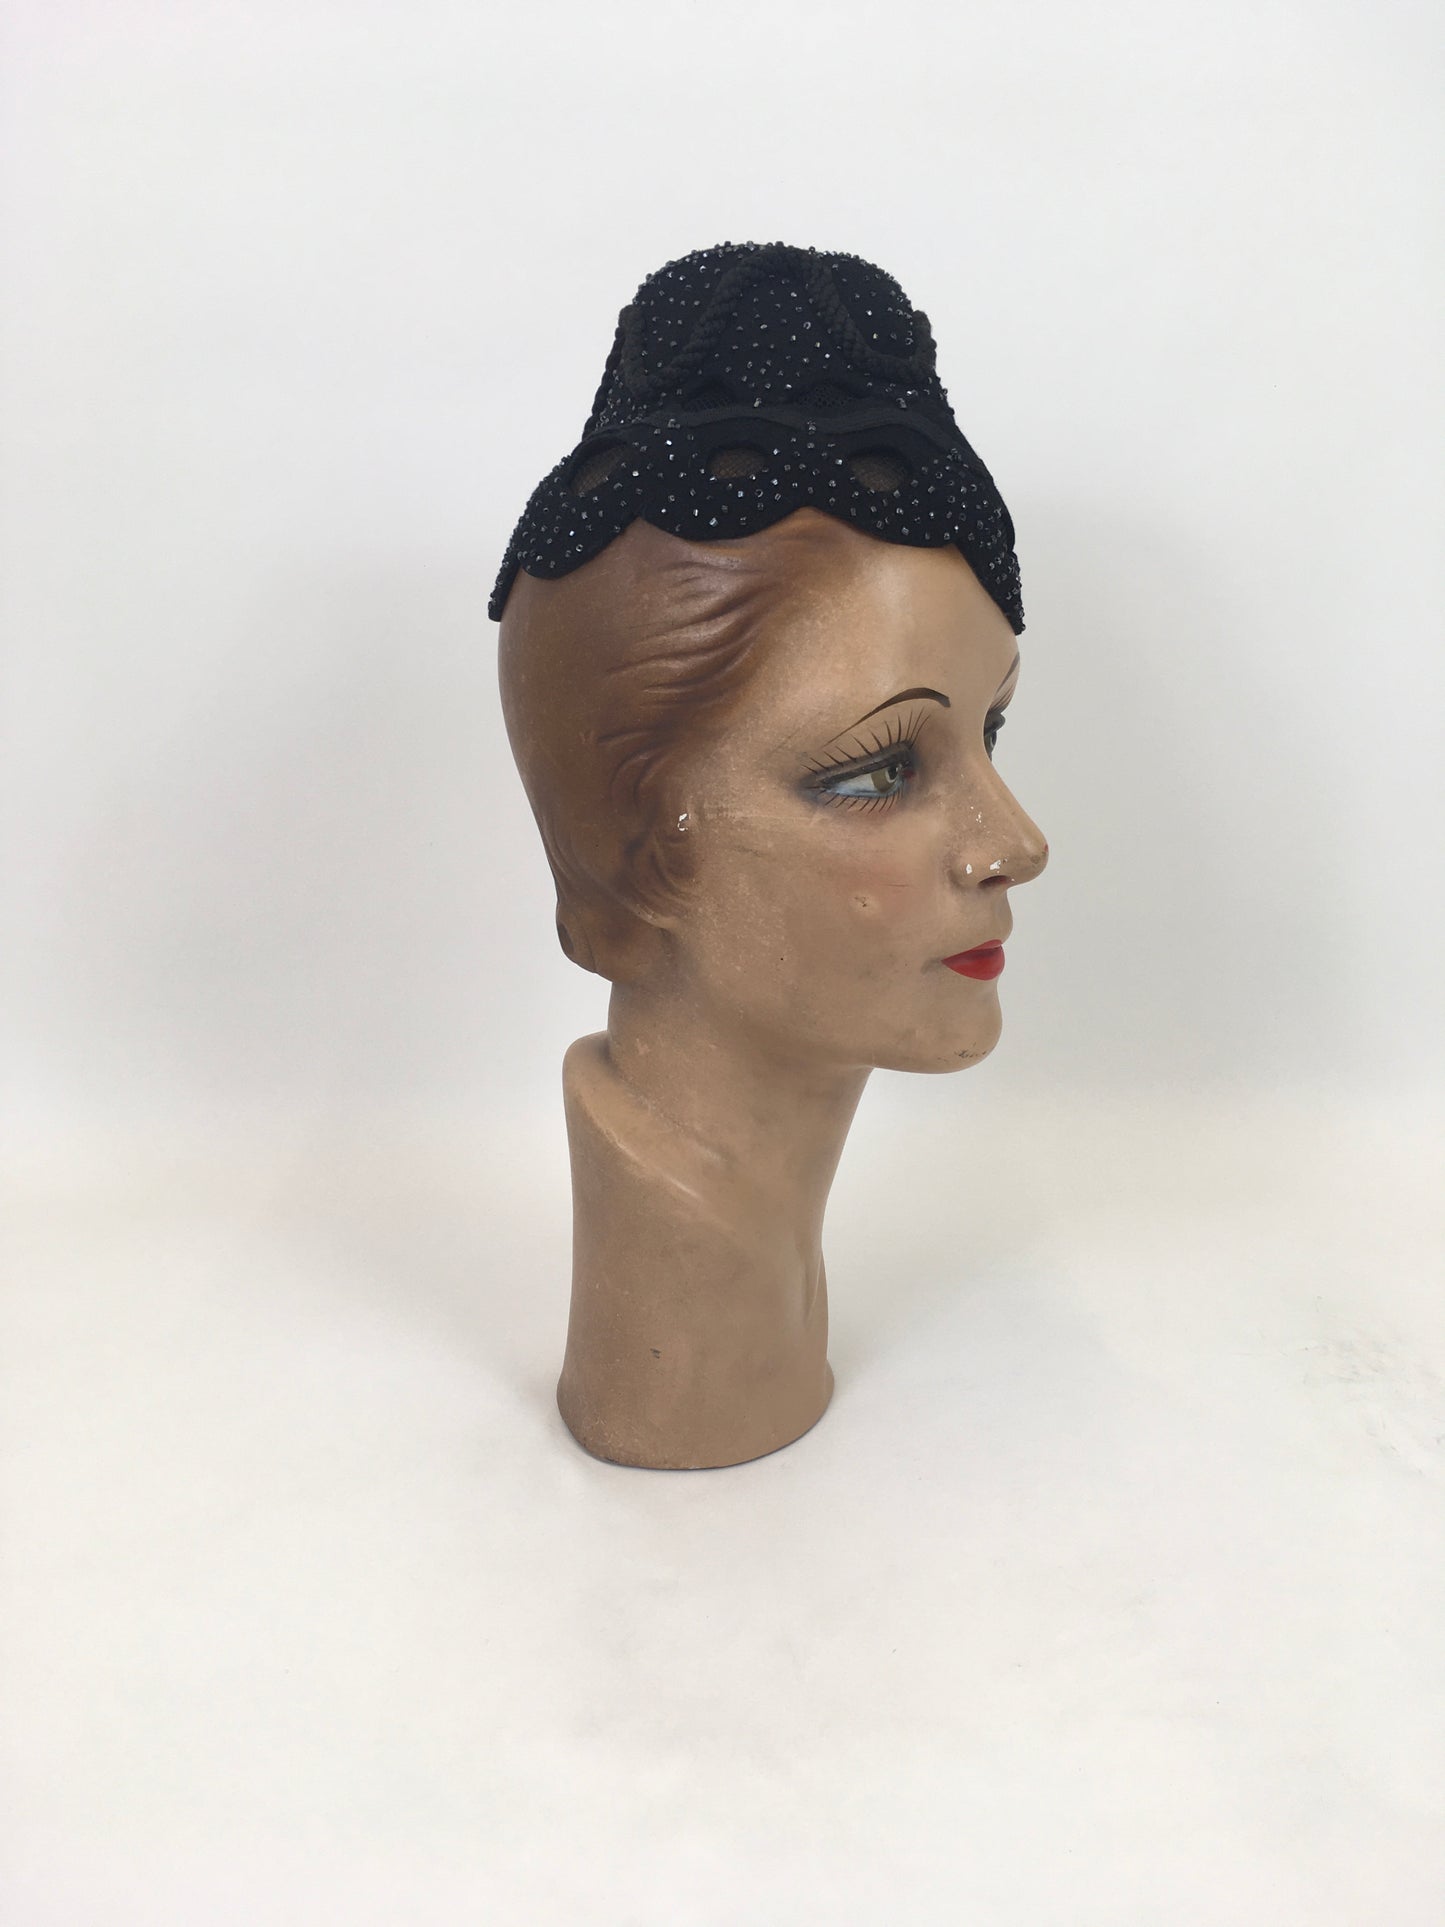 Original 1950's Fabulous Black Tilt hat - With Bugle Bead, Ric Rac and Netting Embellishment